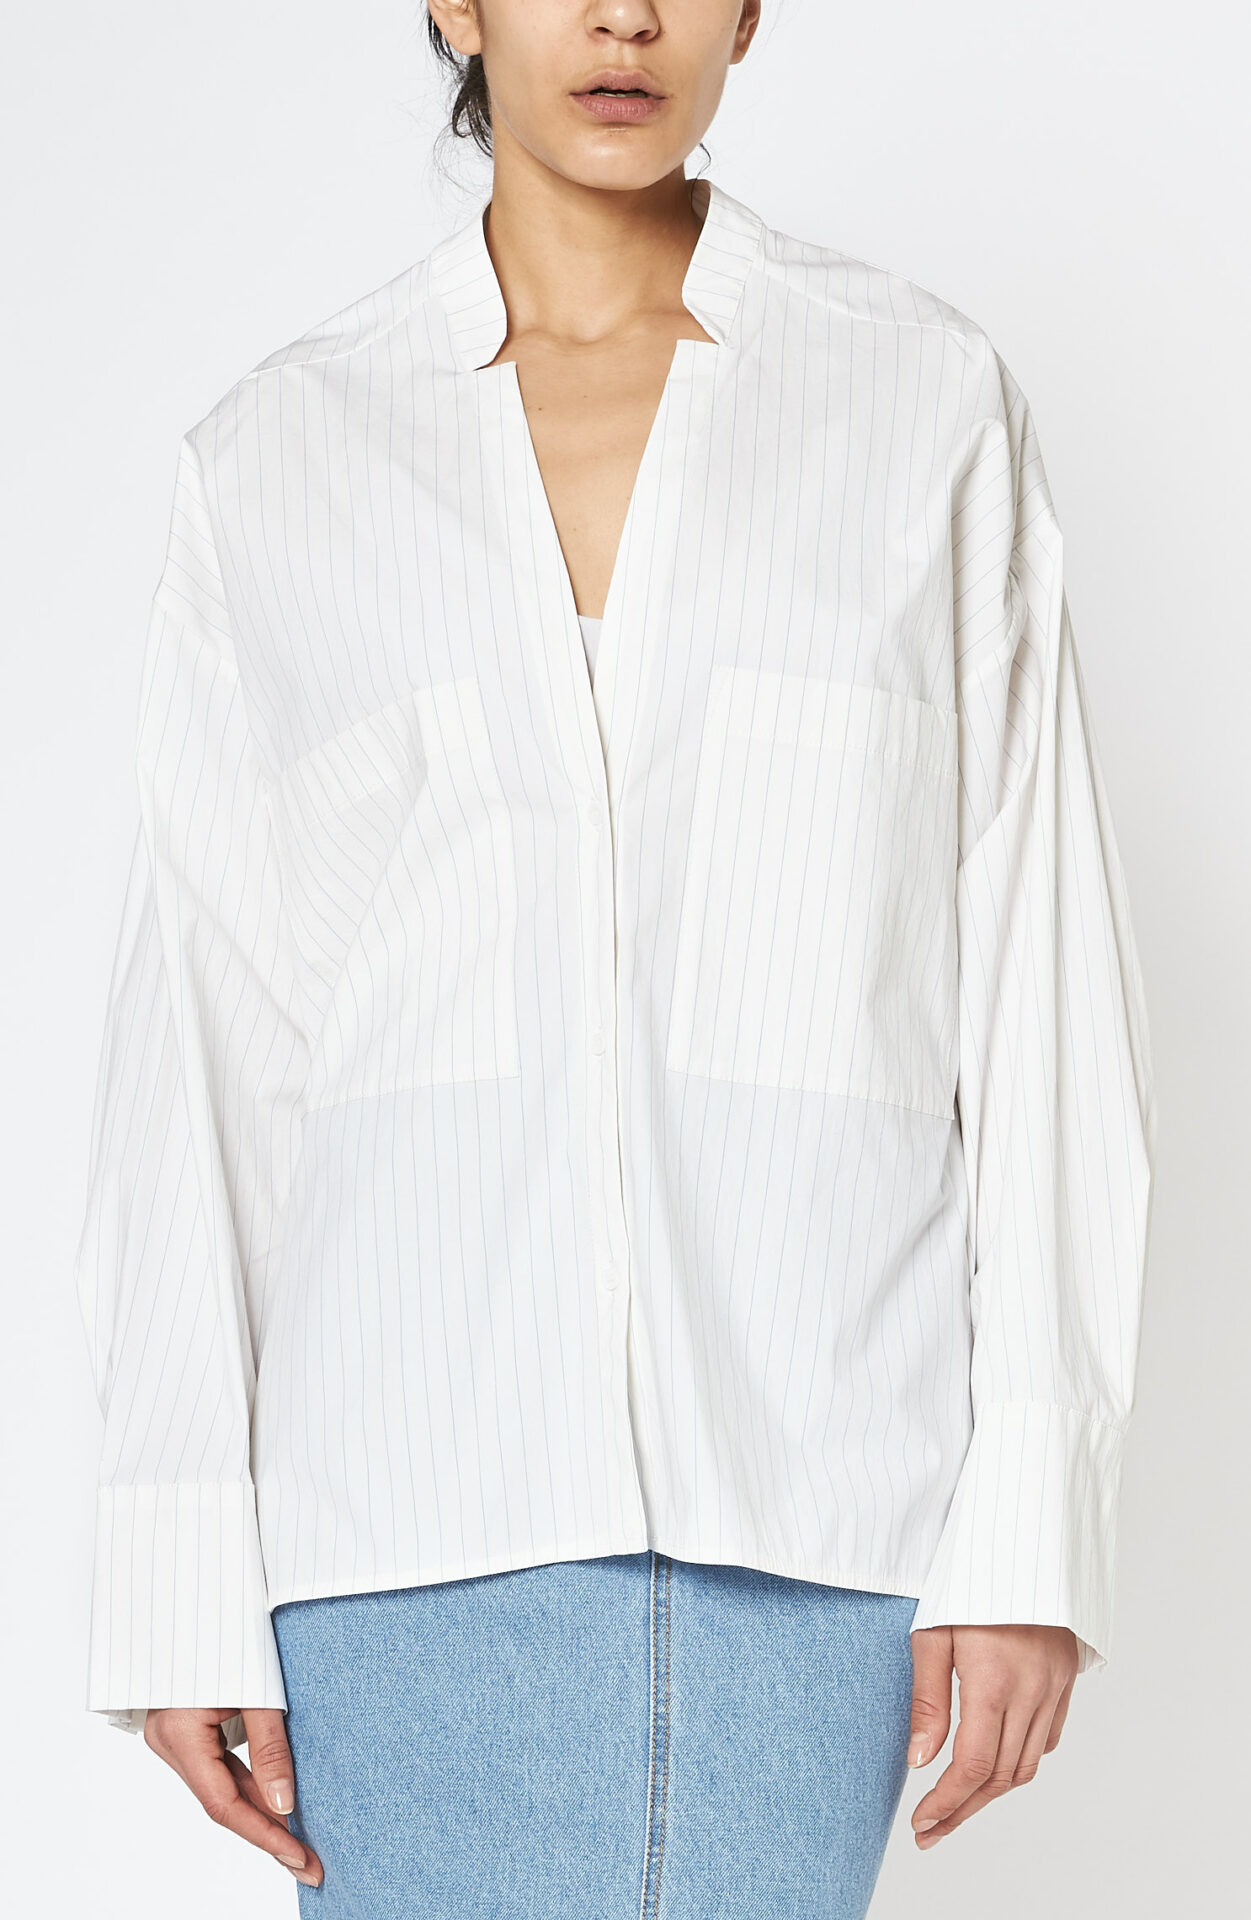 White cotton blouse Tashvi with fine stripes